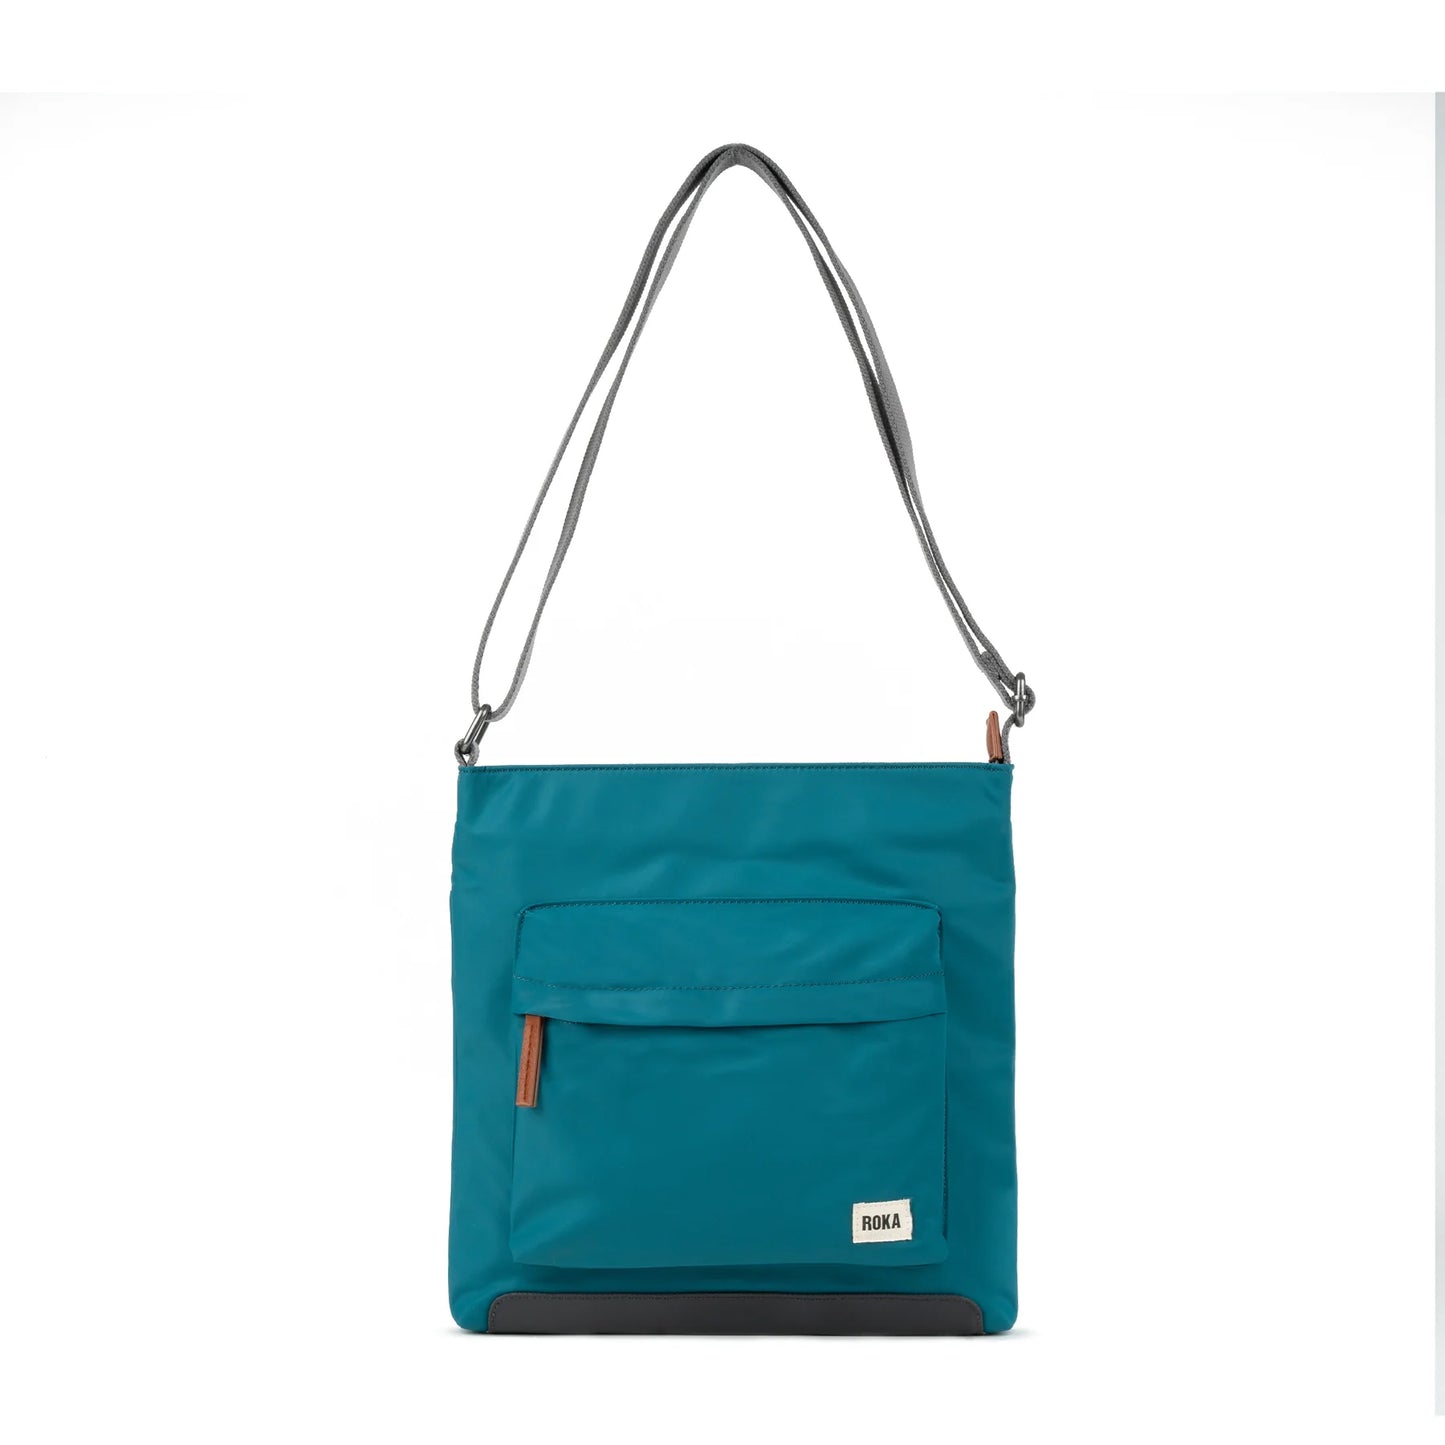 Roka Kennington B Medium Sustainable Crossbody Bag